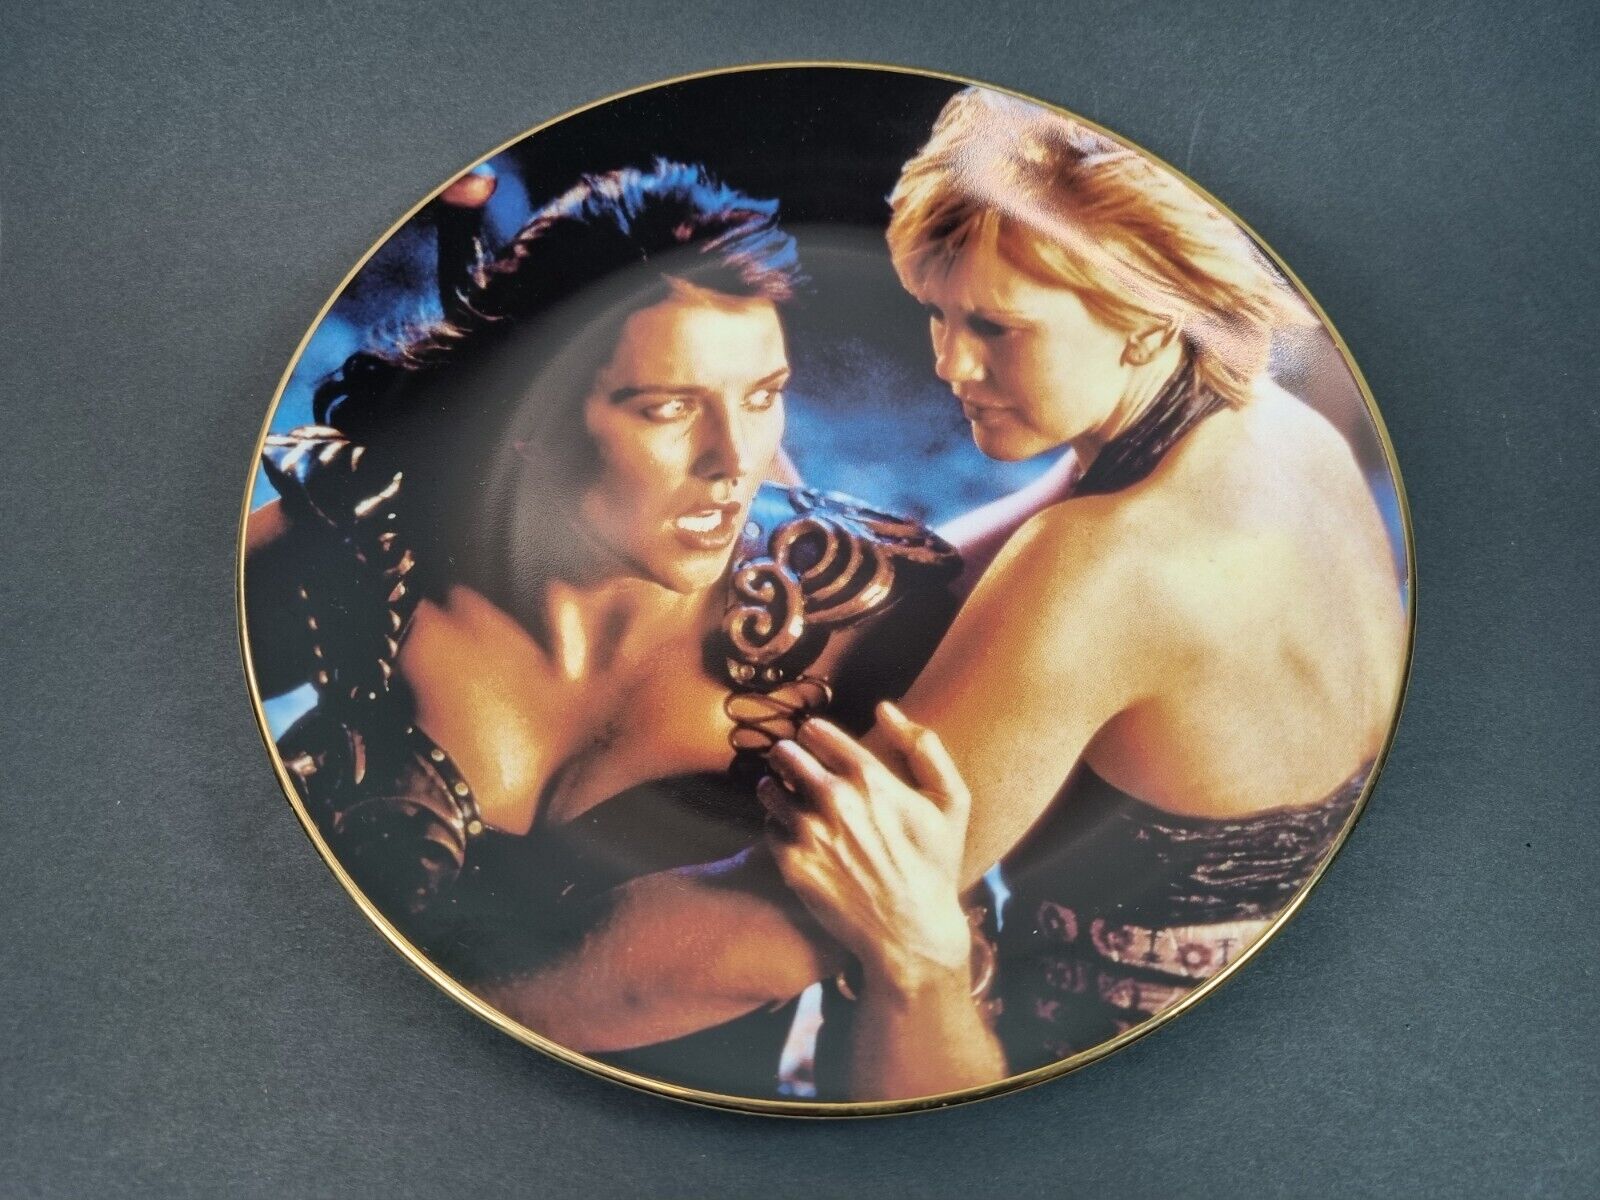 Xena warrior princess. VTG collector\'s plate. Xena and Gabriel. #557-1000.